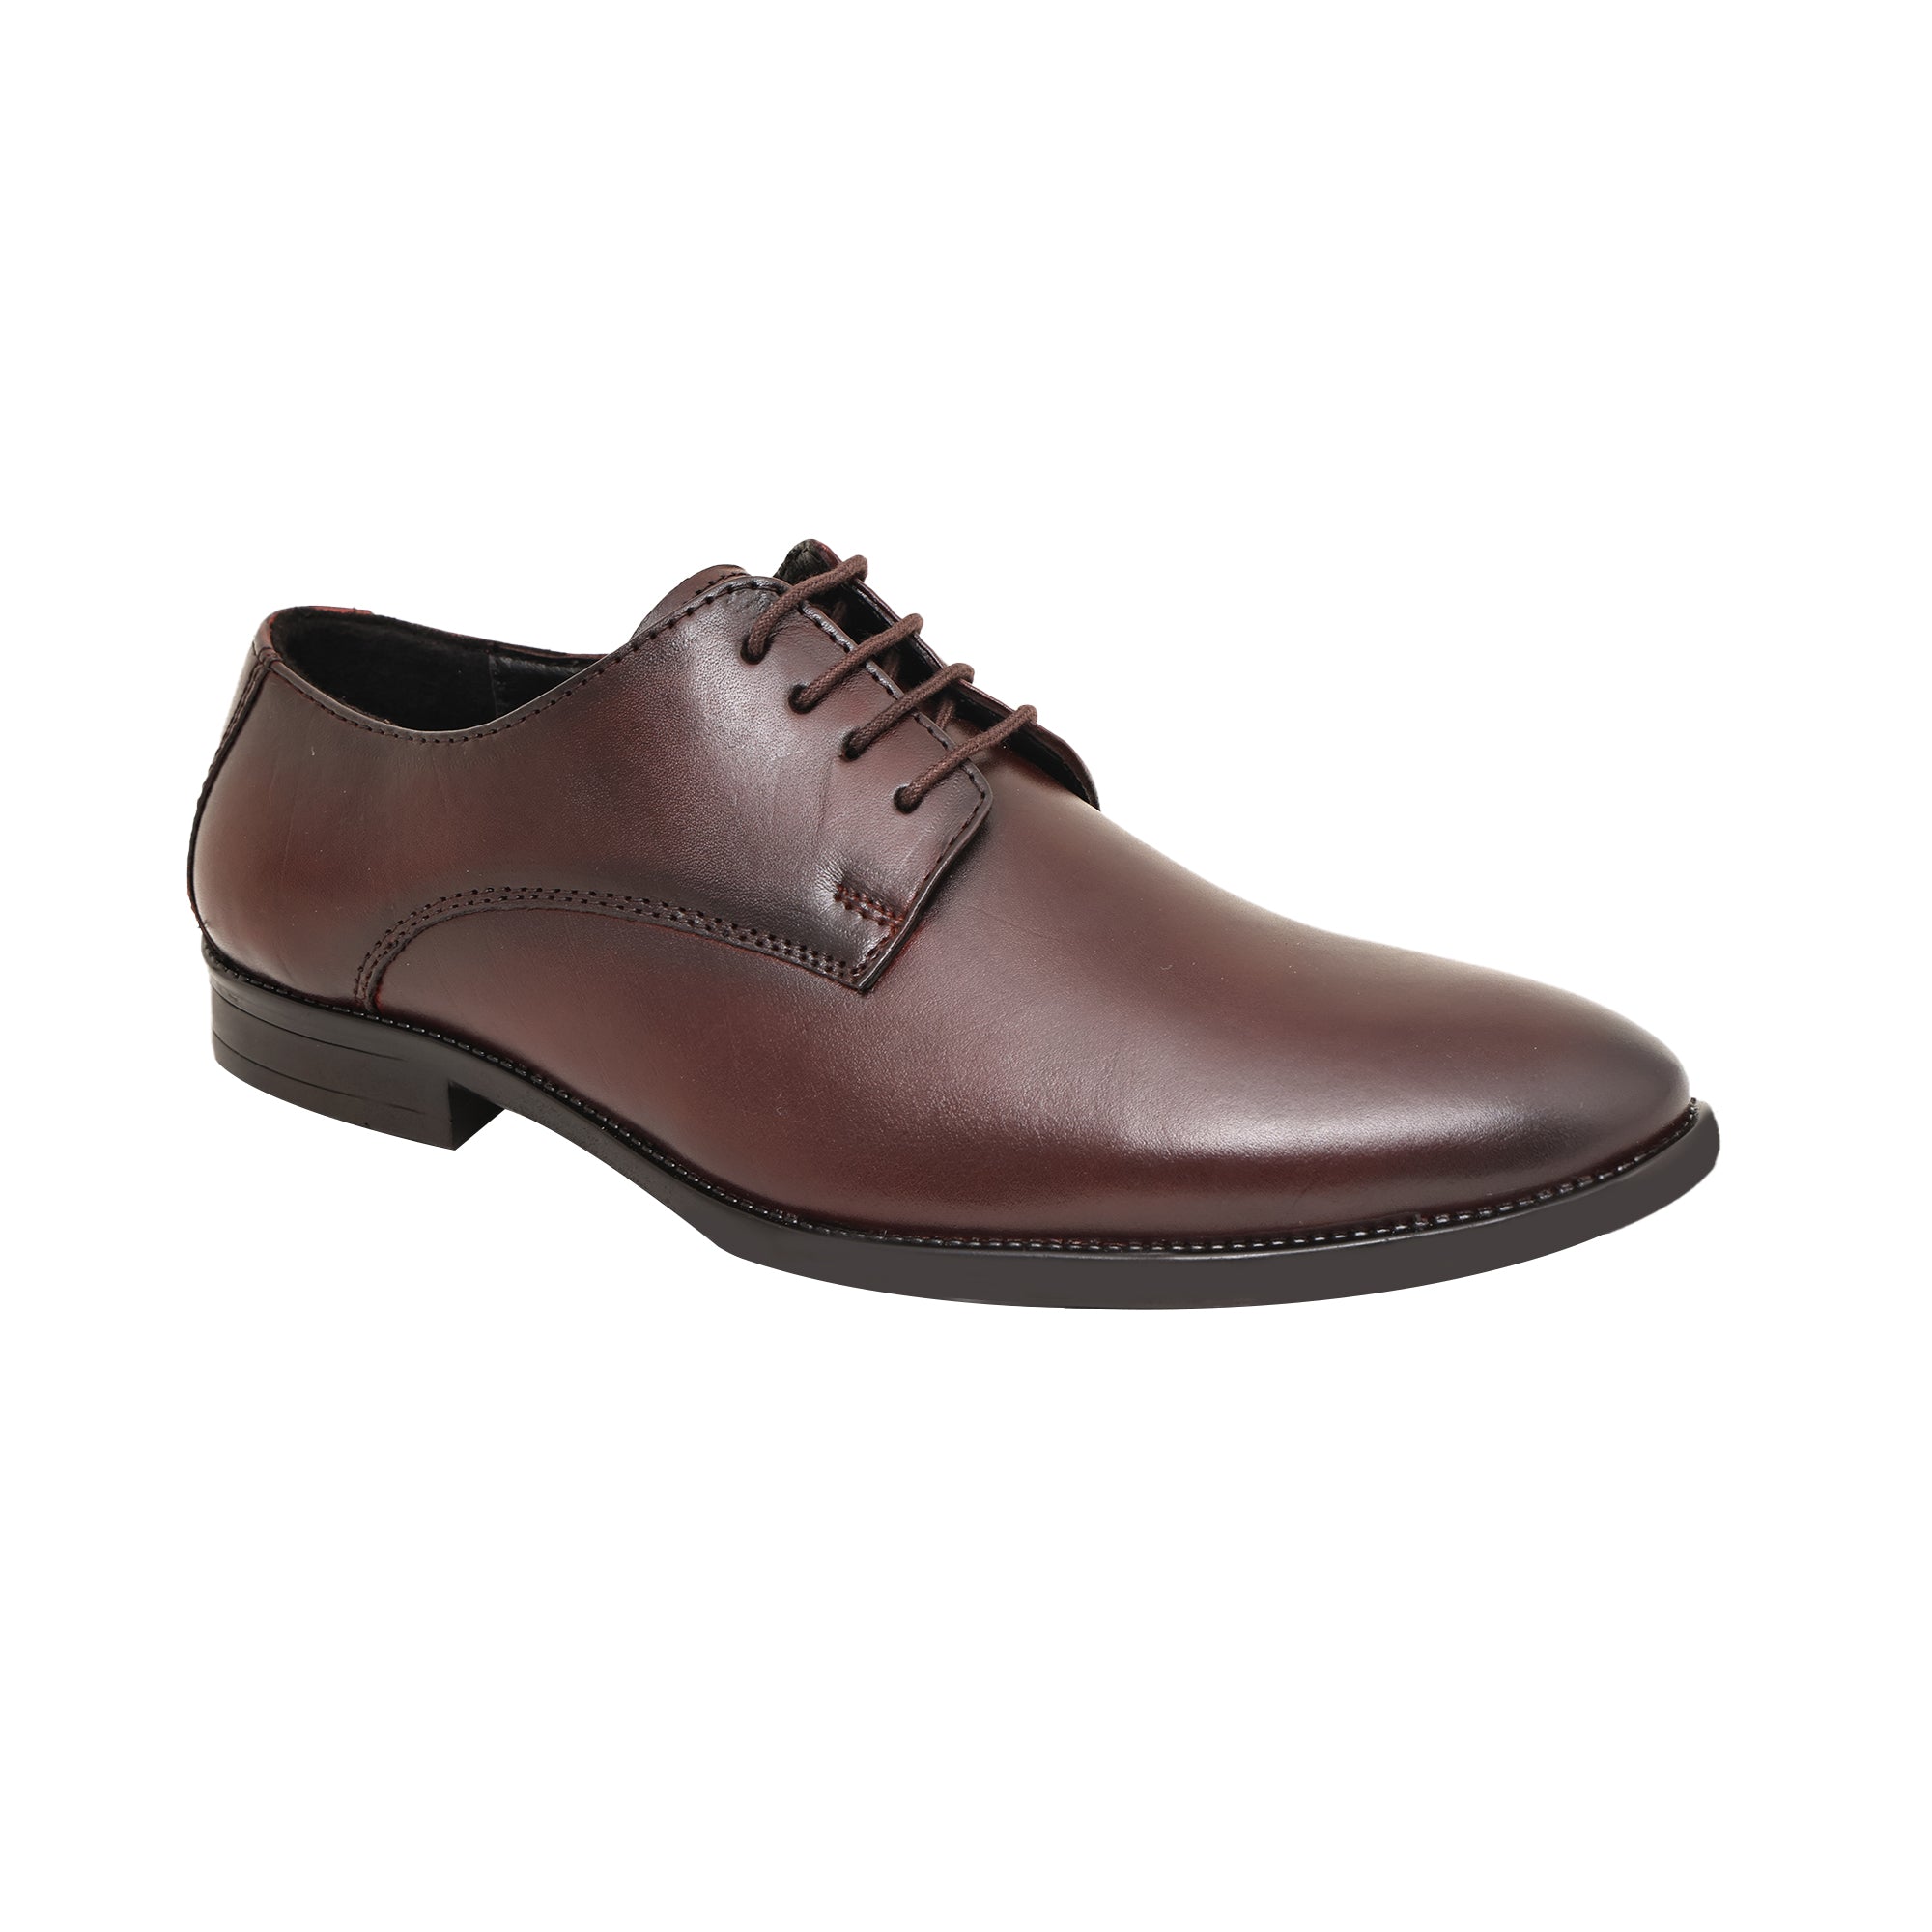 Louis Blanc Italian Leather Derby Shoes For Men’s (LB02)